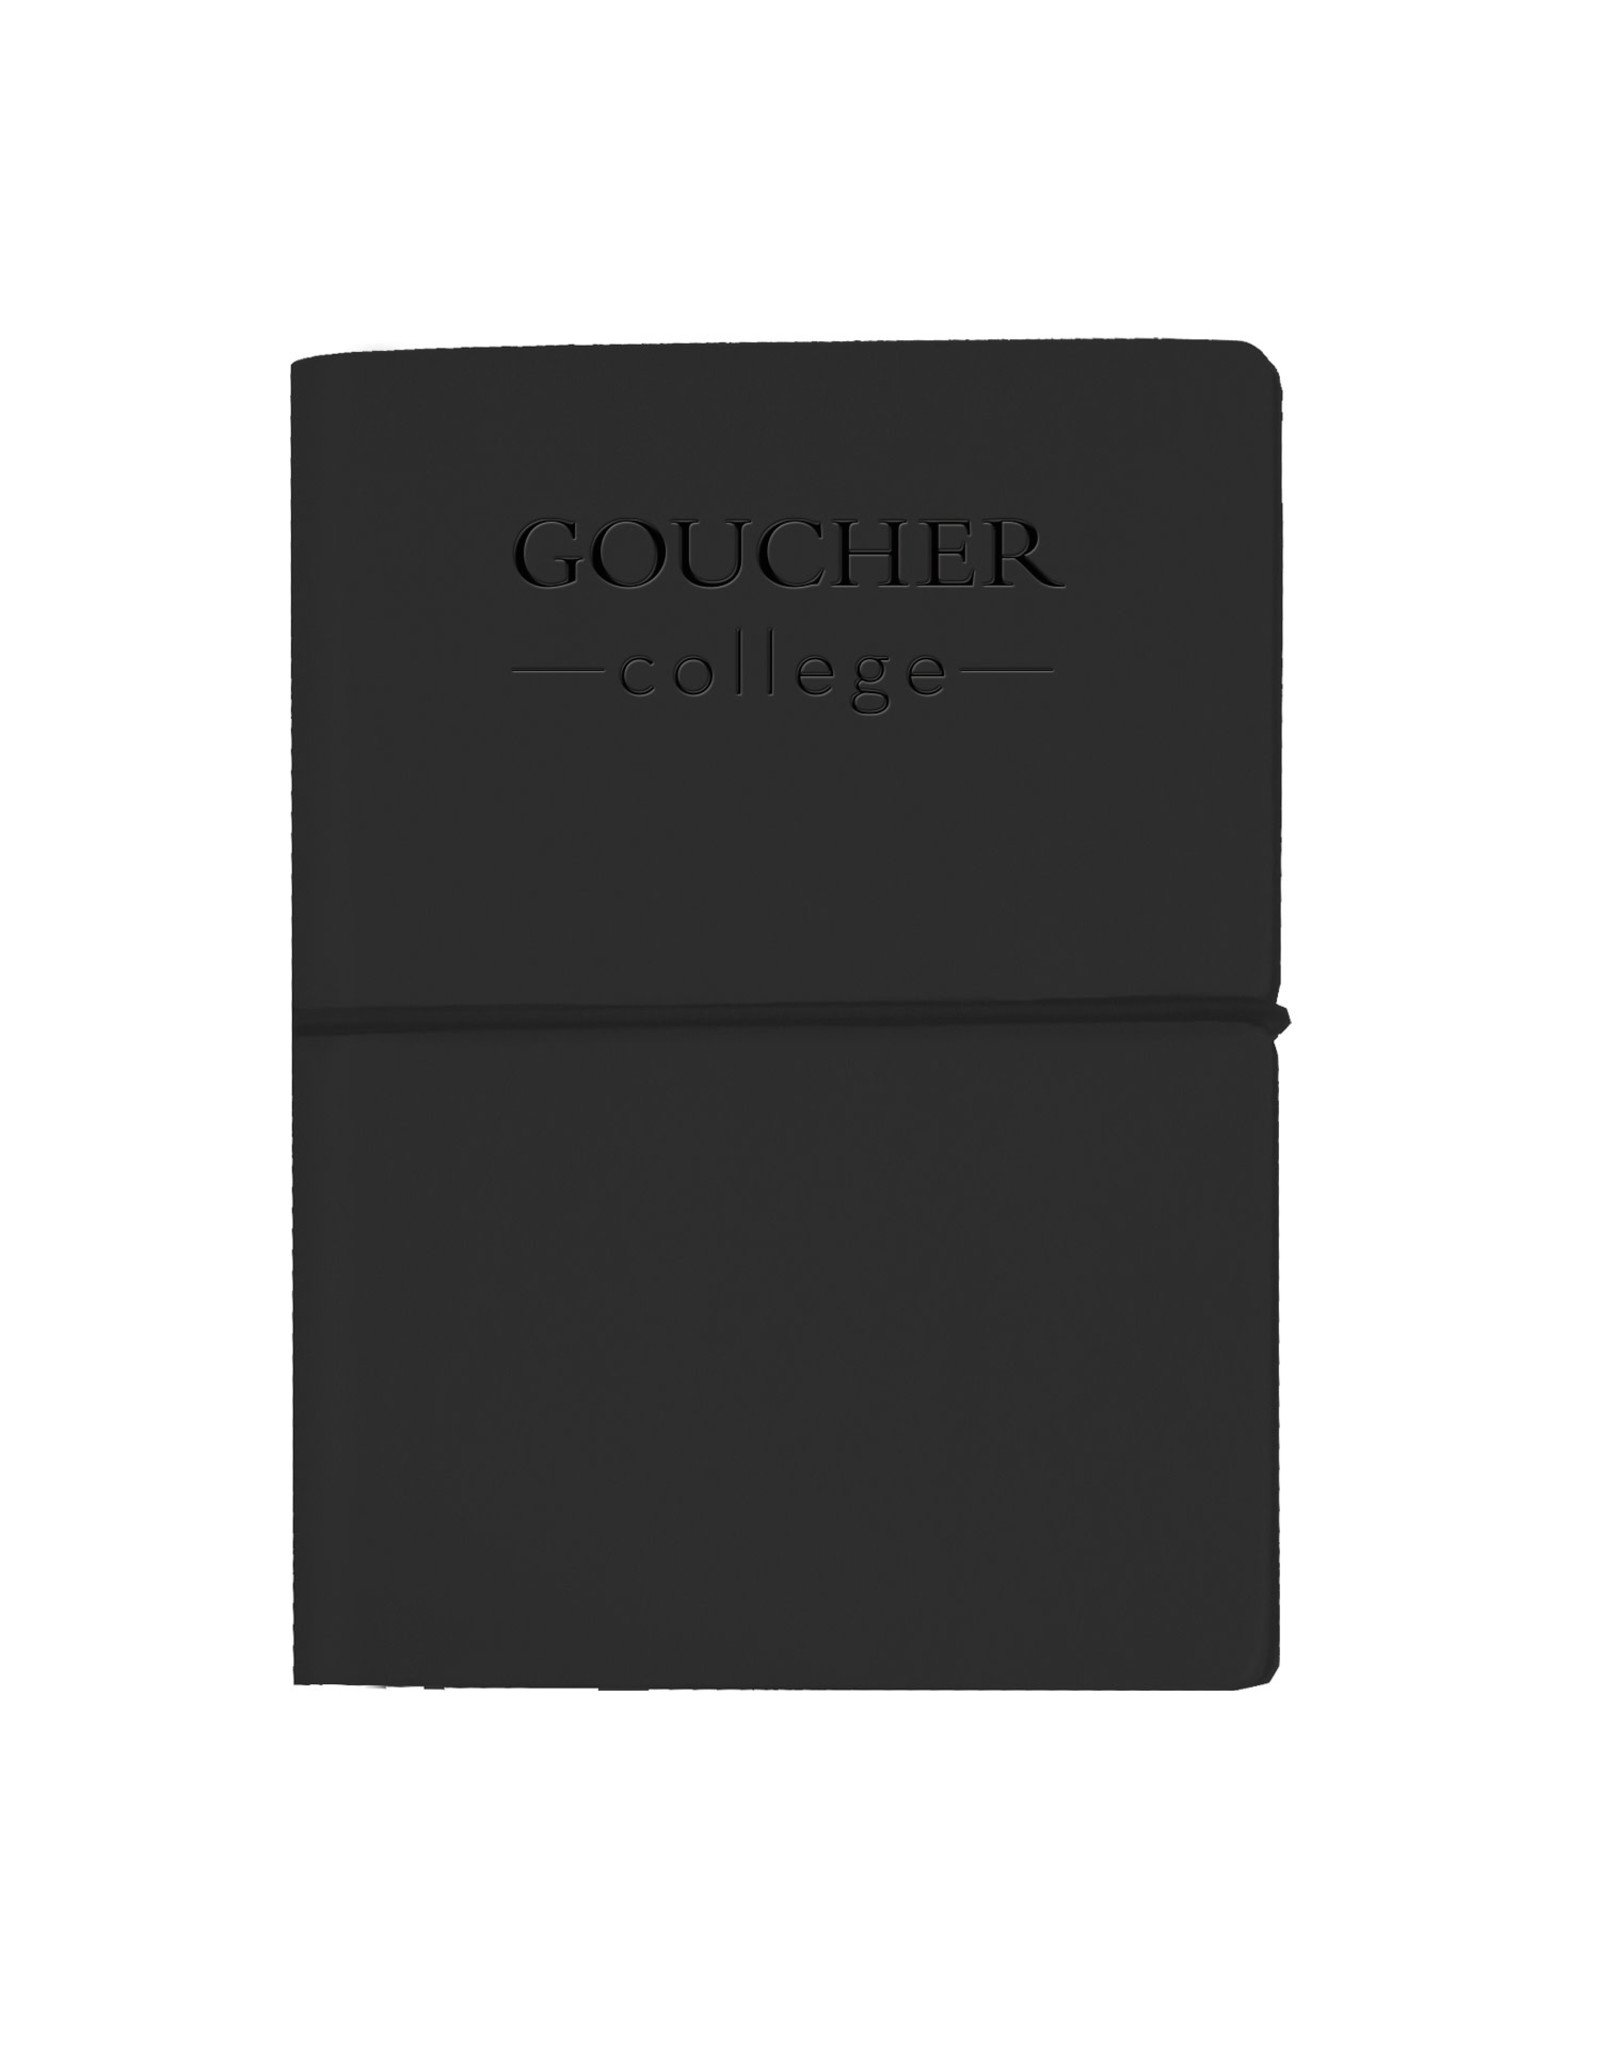 Jardine Italian Leather Notebook "Goucher College"